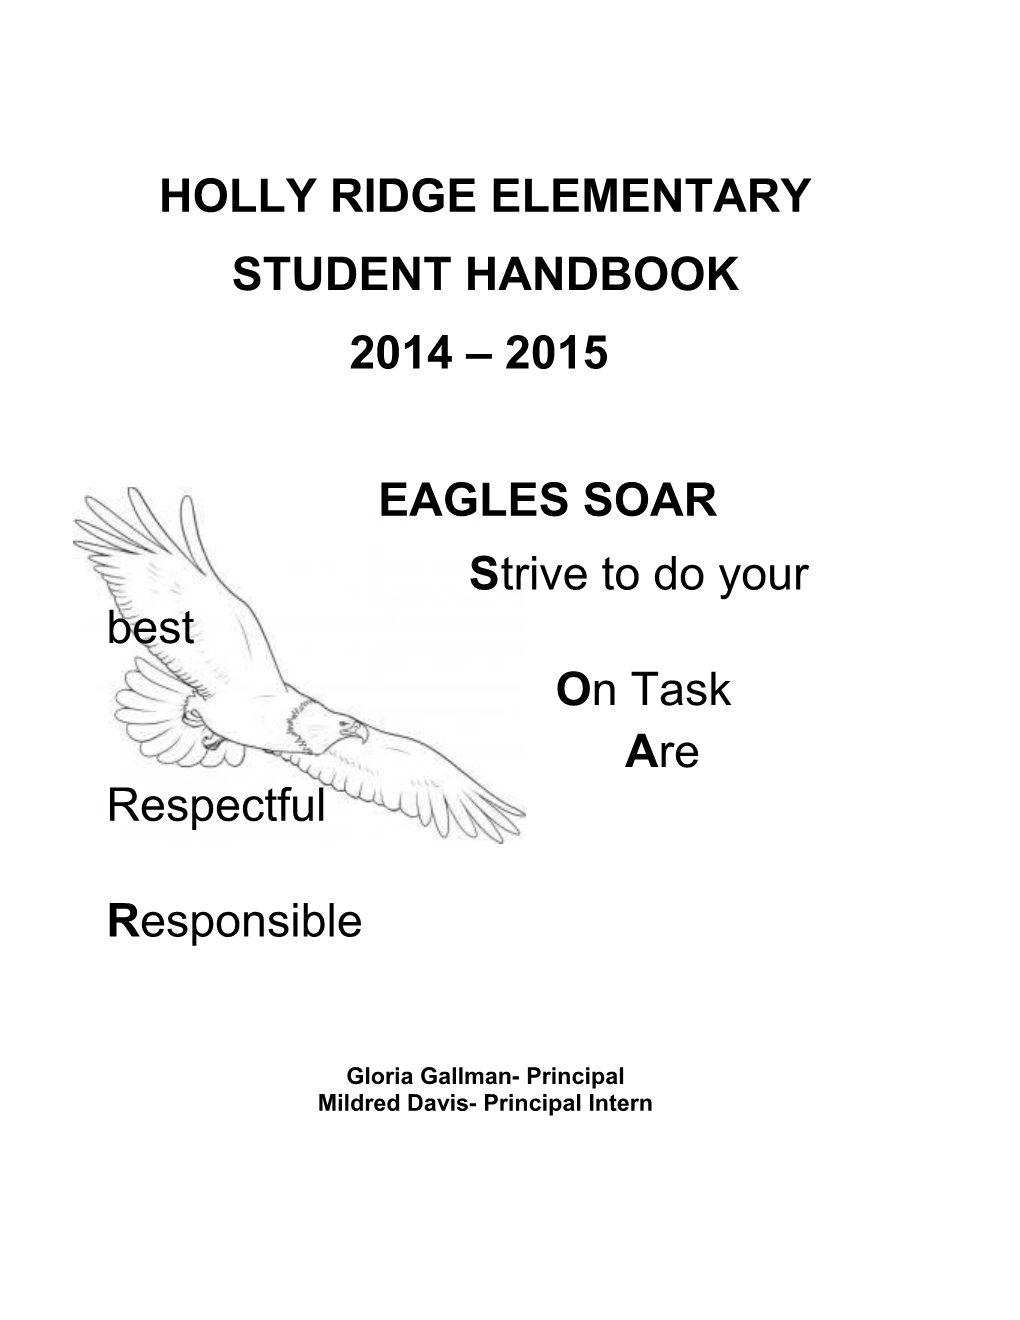 Holly Ridge Elementary